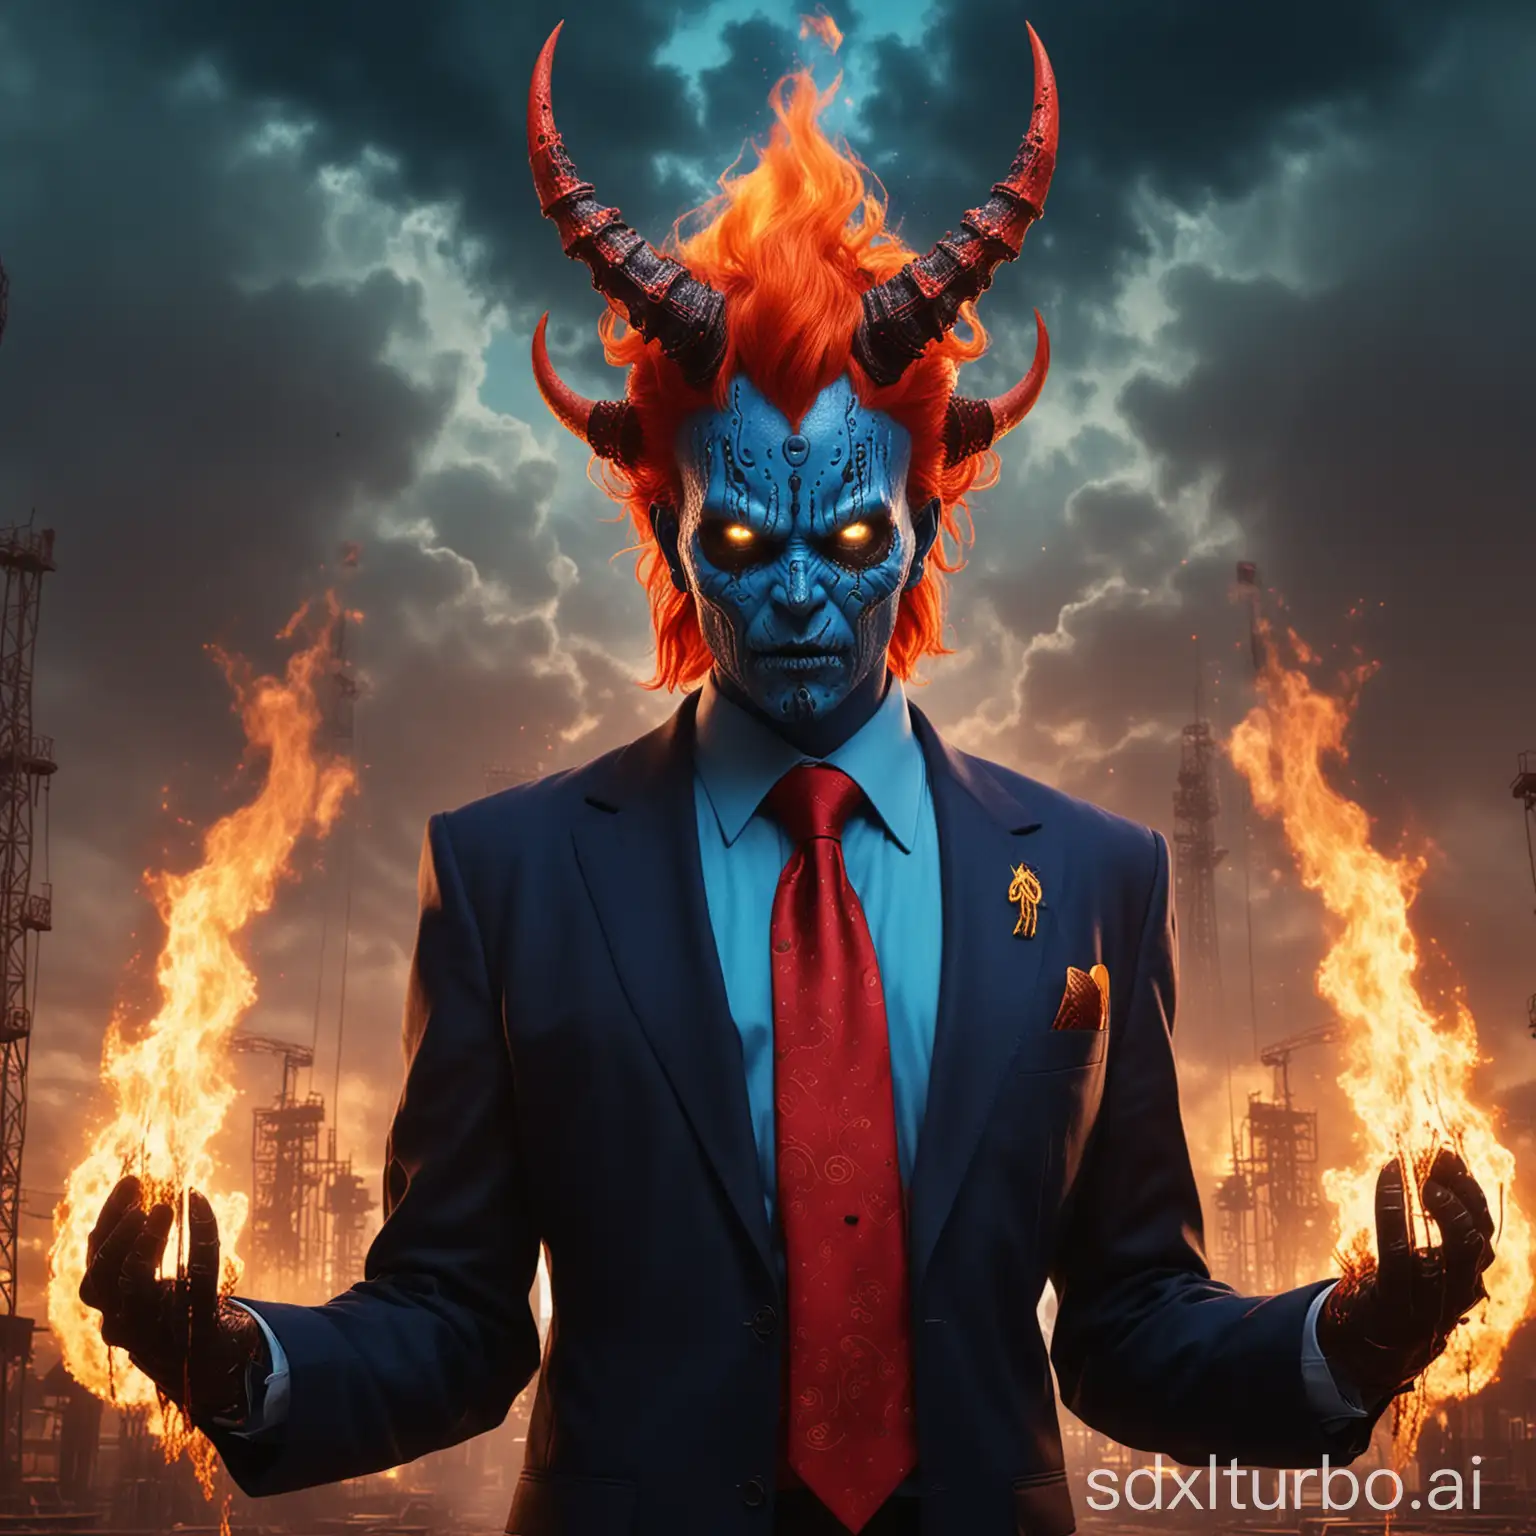 Fiery-Confrontation-Kali-Purush-vs-Corporate-Greed